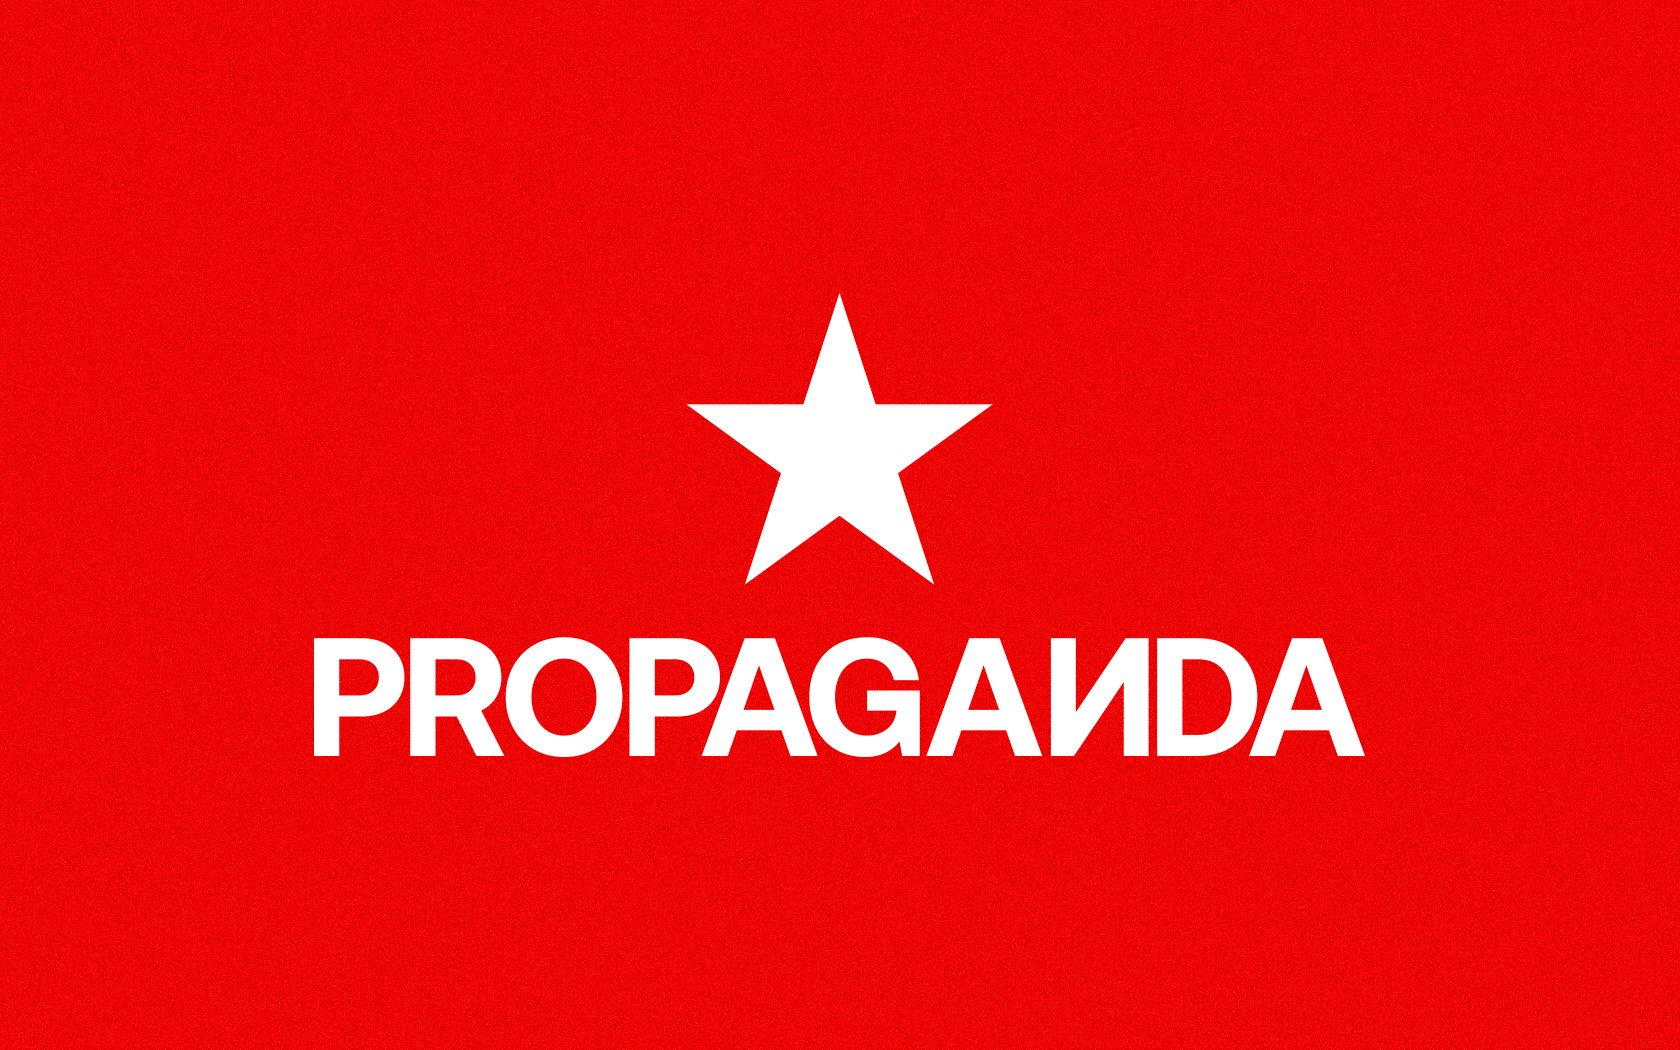 Propaganda brand logo in white